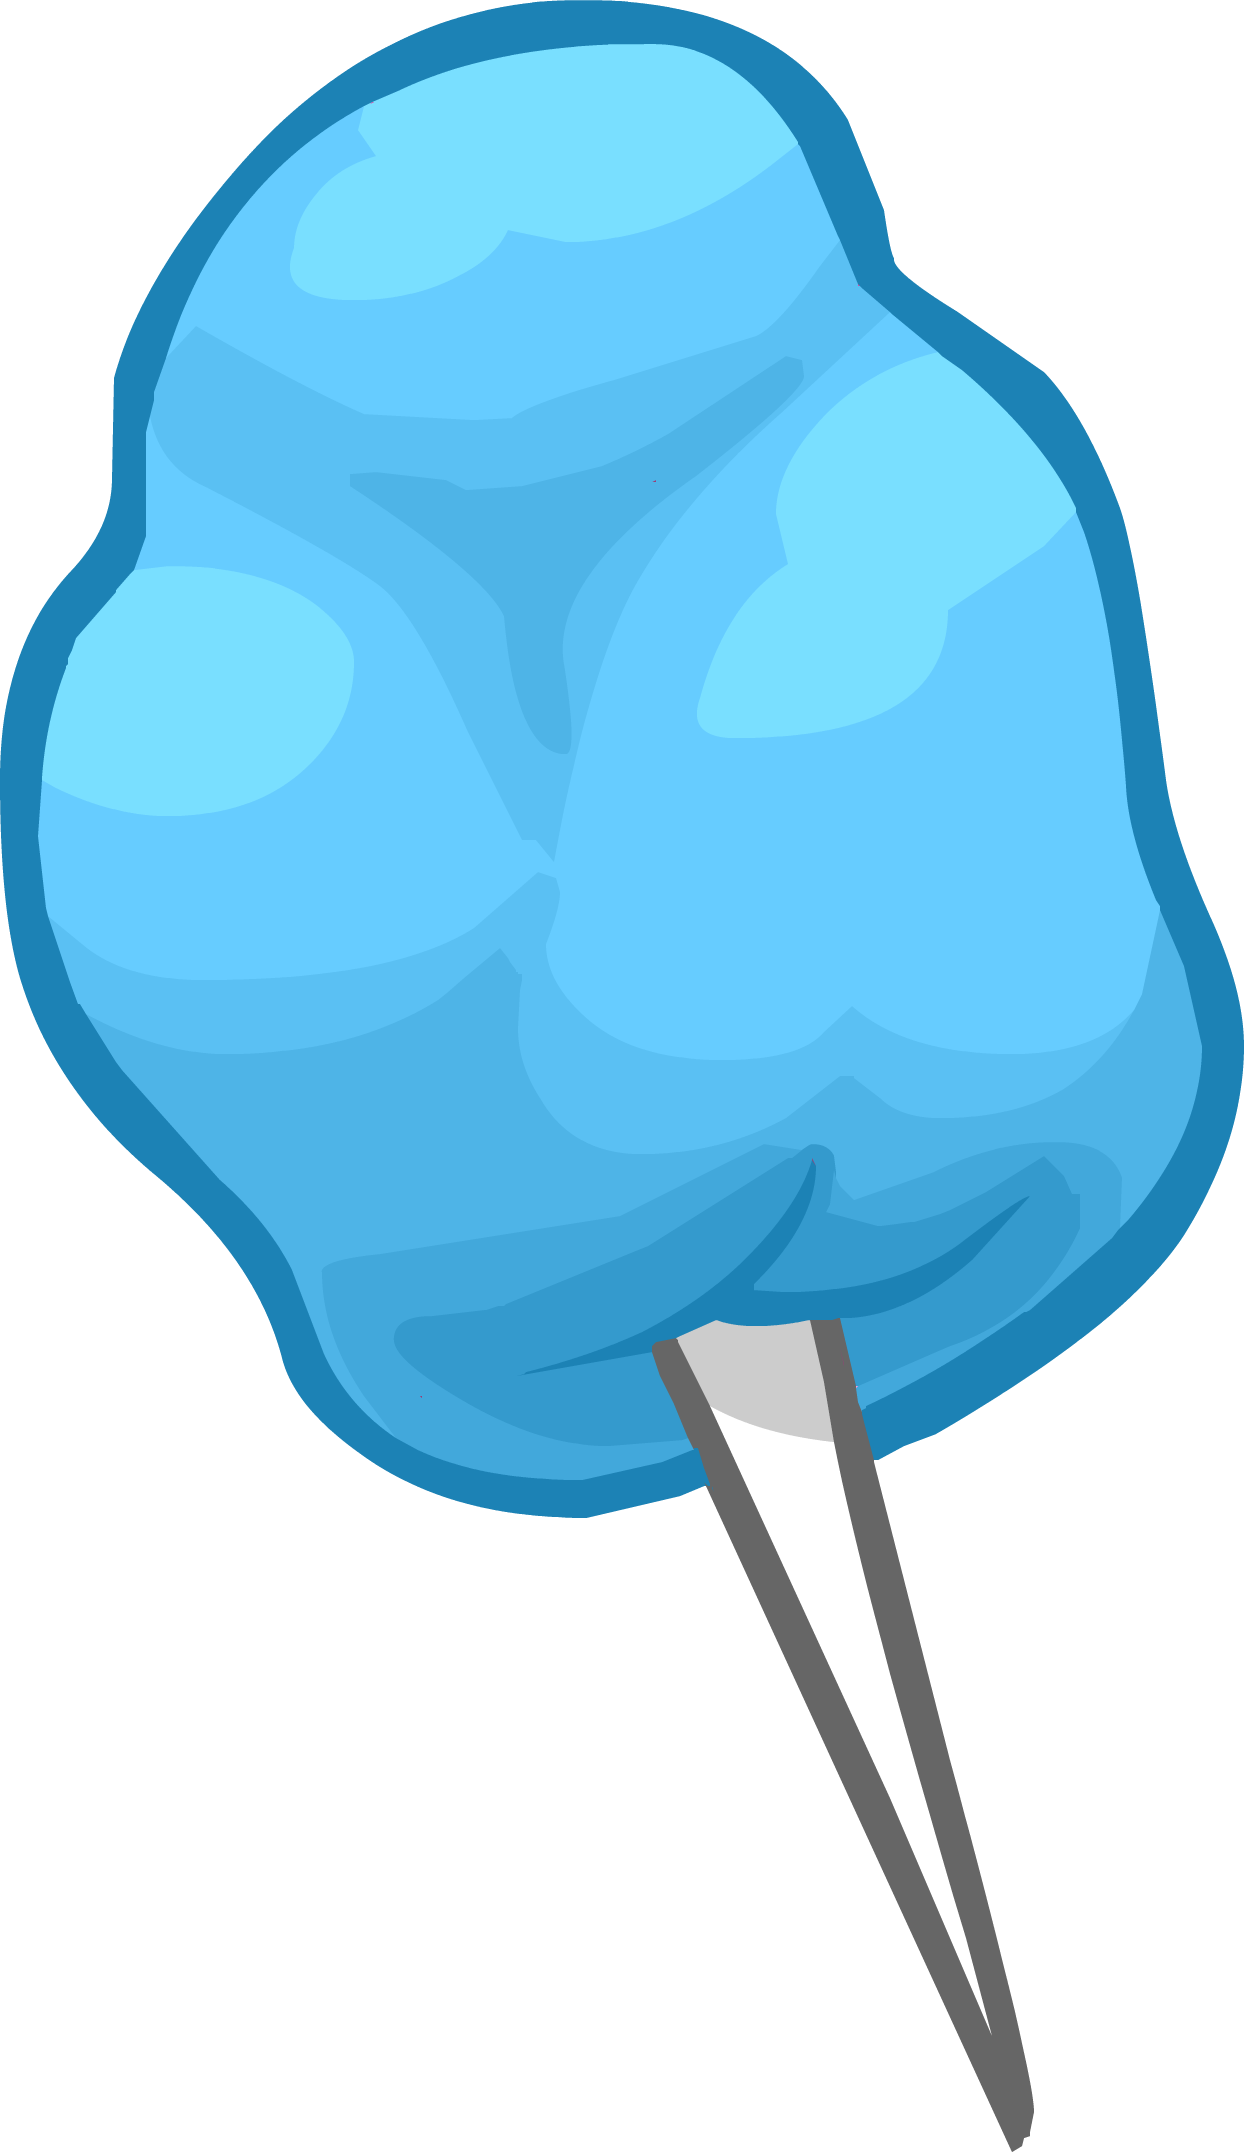 Blue cotton candy.